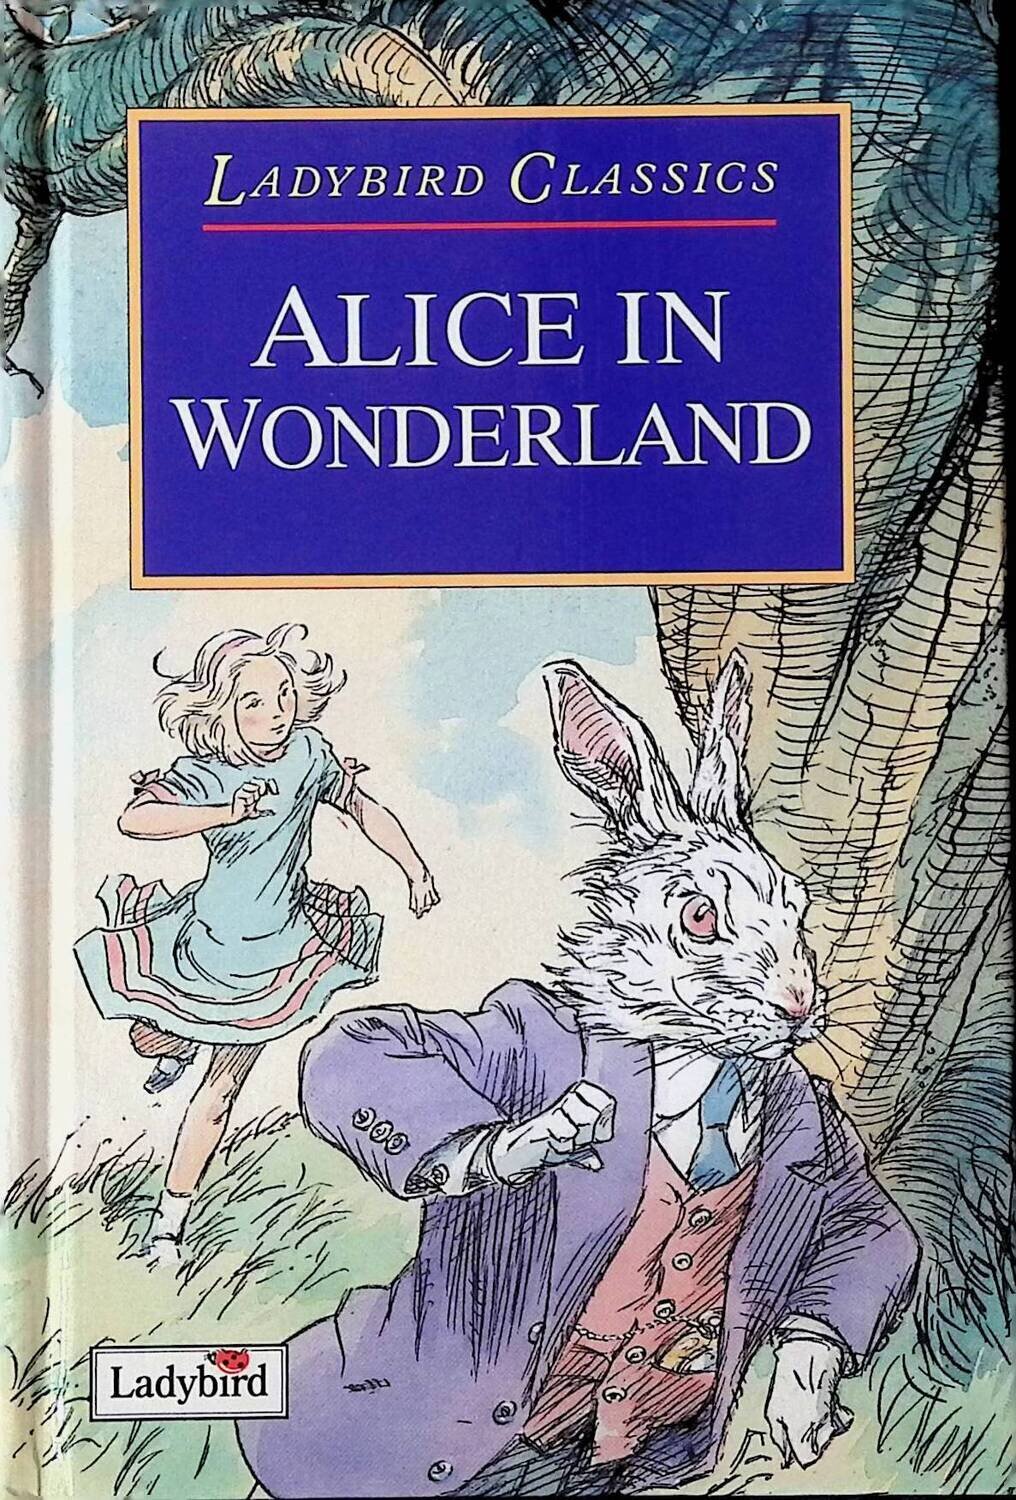 Alice in Wonderland; Lewis Carroll, Prunella Scales